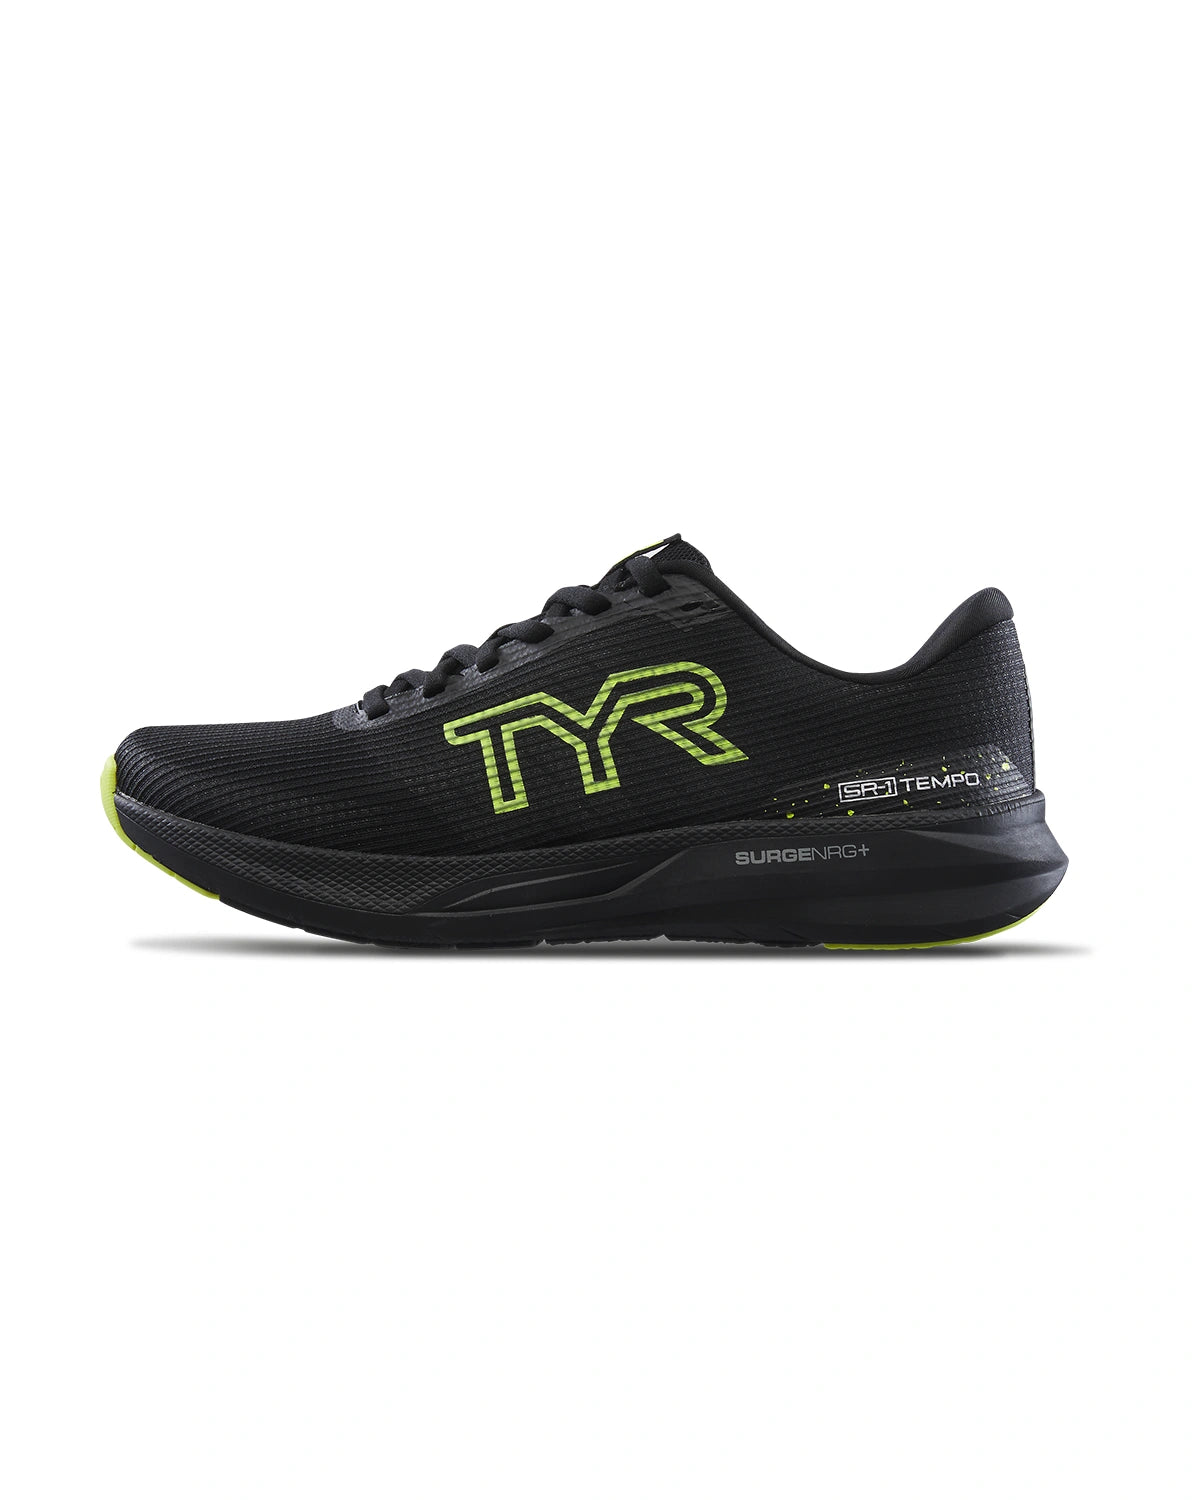 TYR SR-1 Tempo Runner Limited Edition Attak Black / Yellow